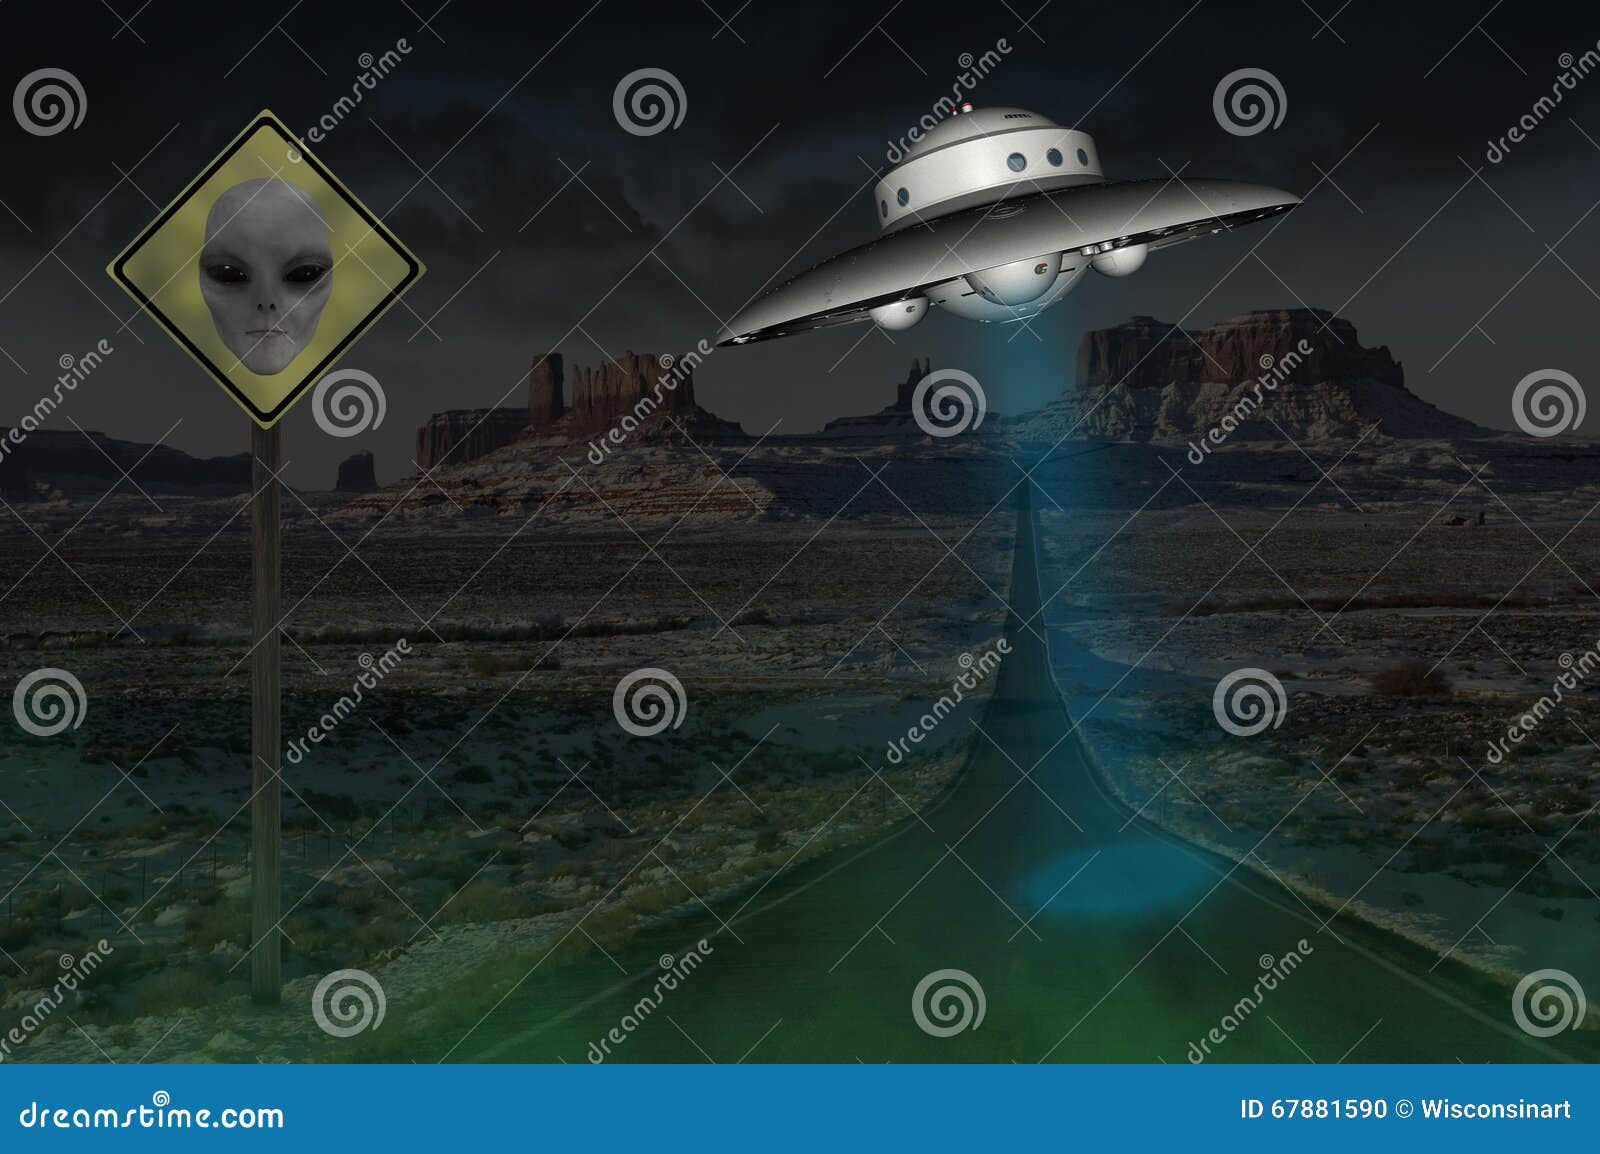 area 51 surreal alien ufo sighting